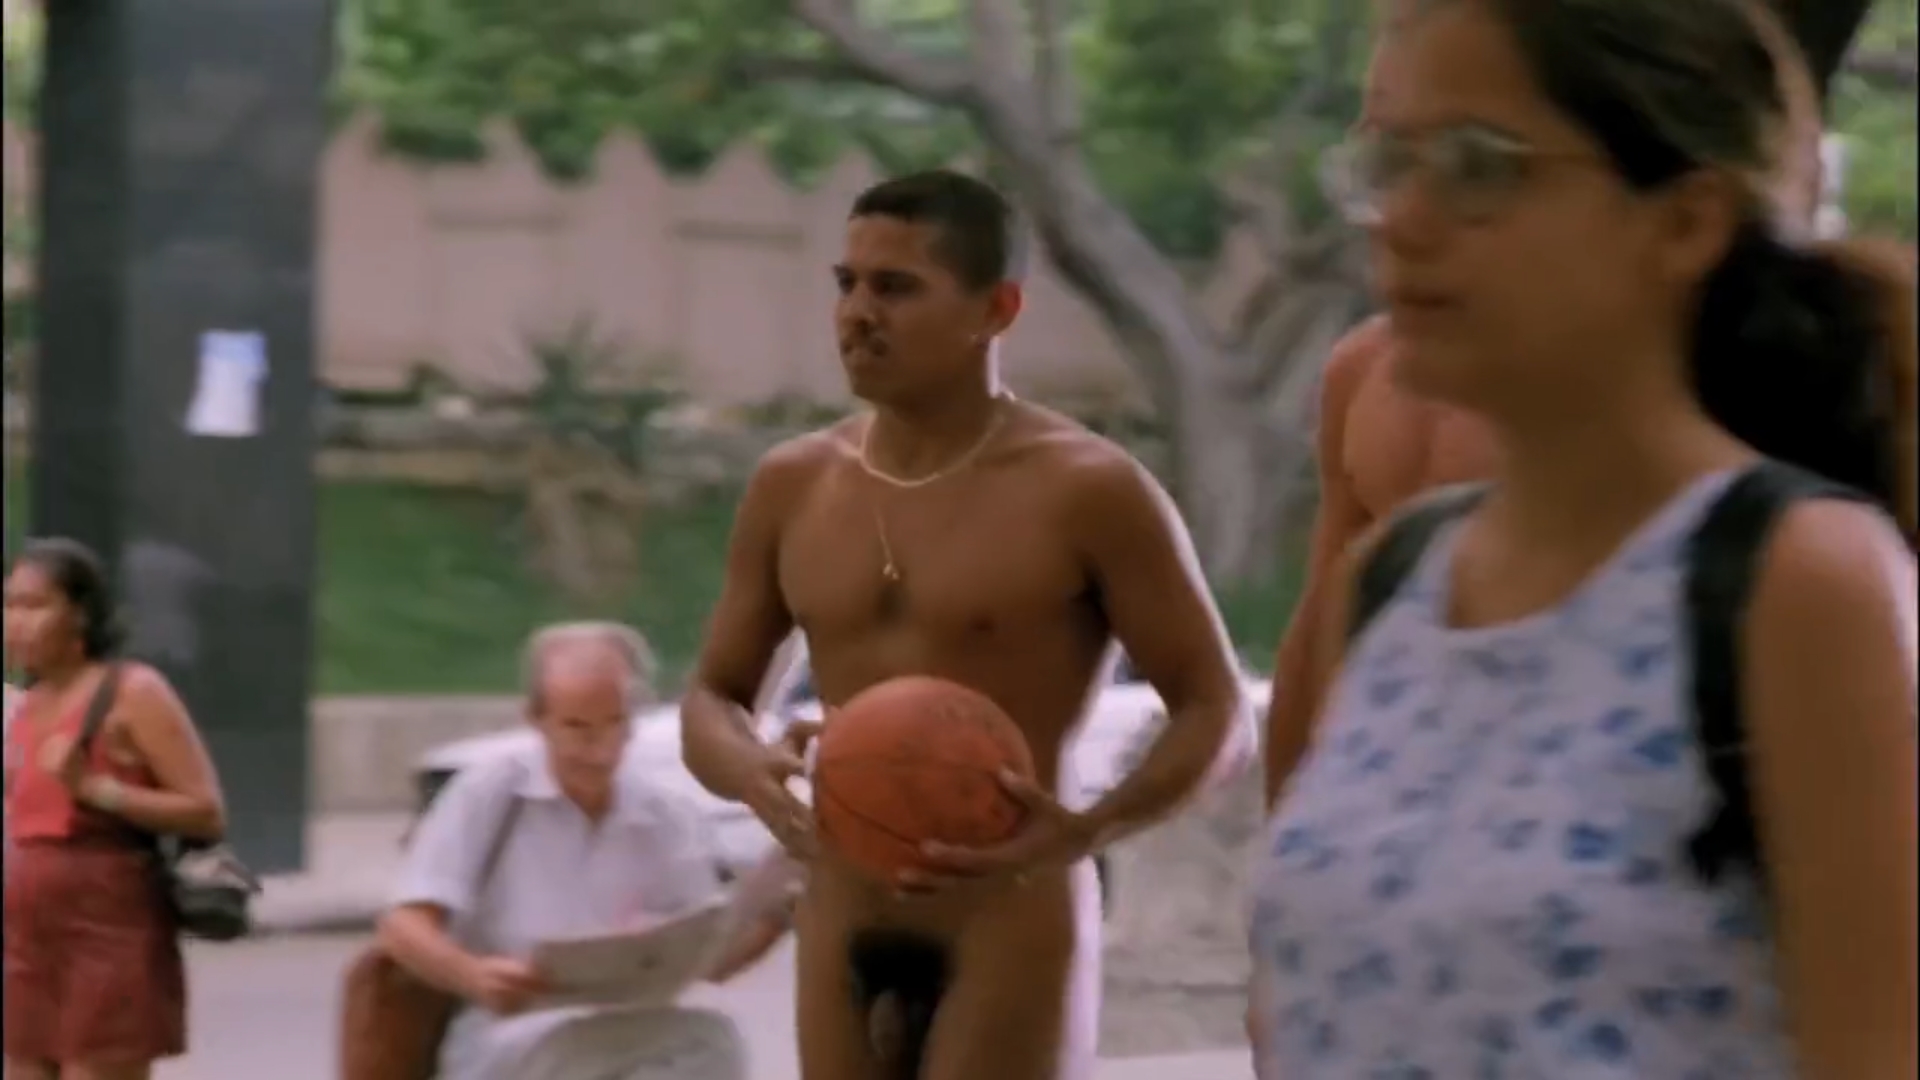 Nude twunks in a scene from a rare 1990s Cuban film